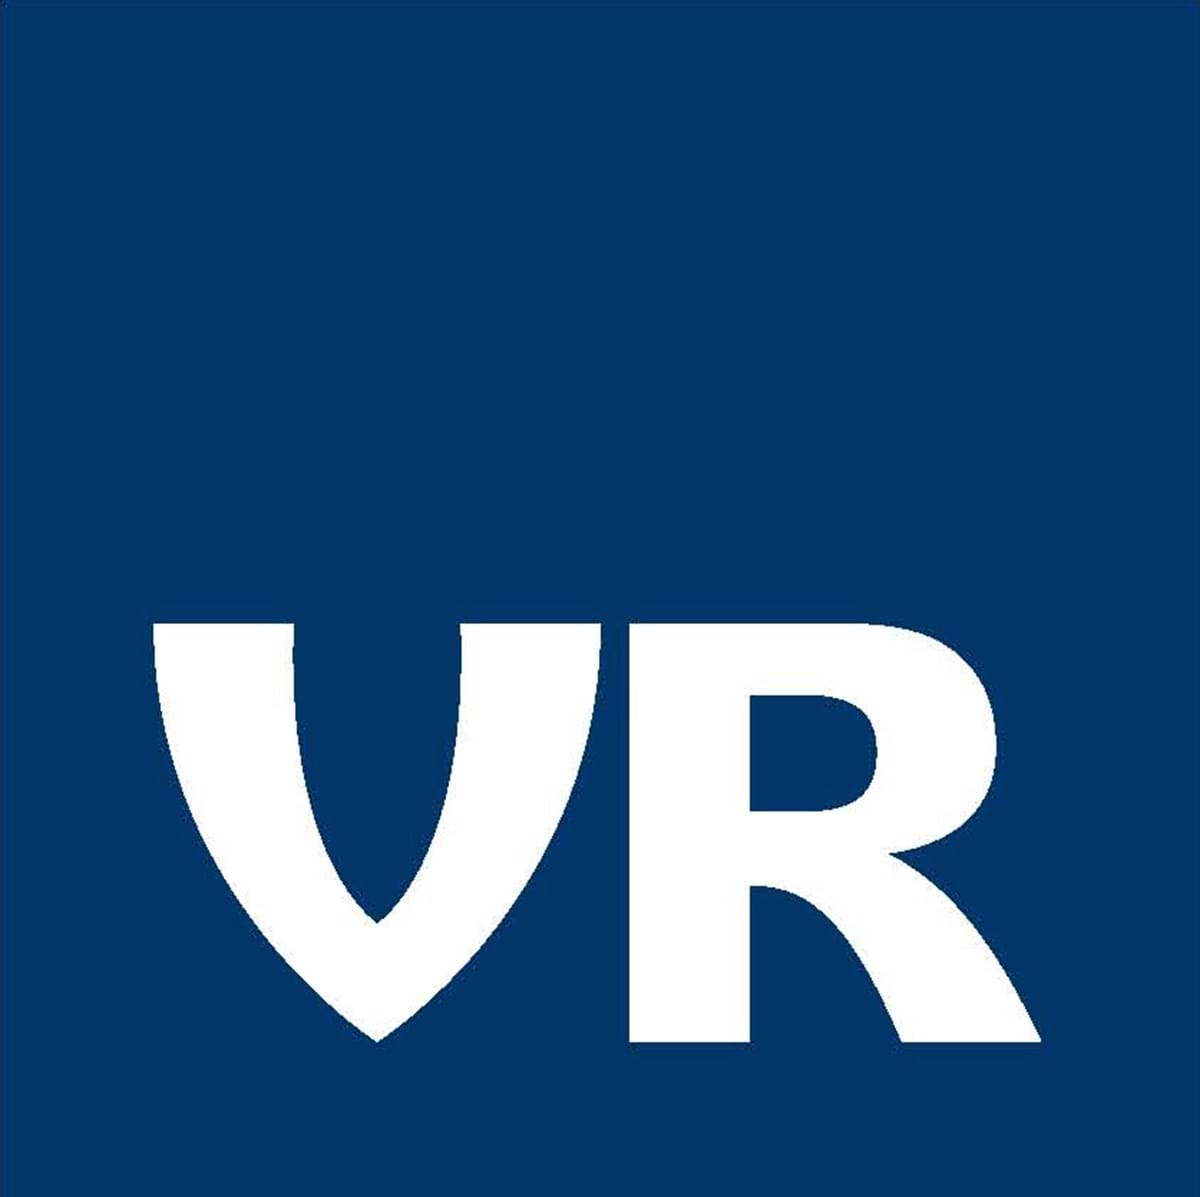 VR logo an texta stort